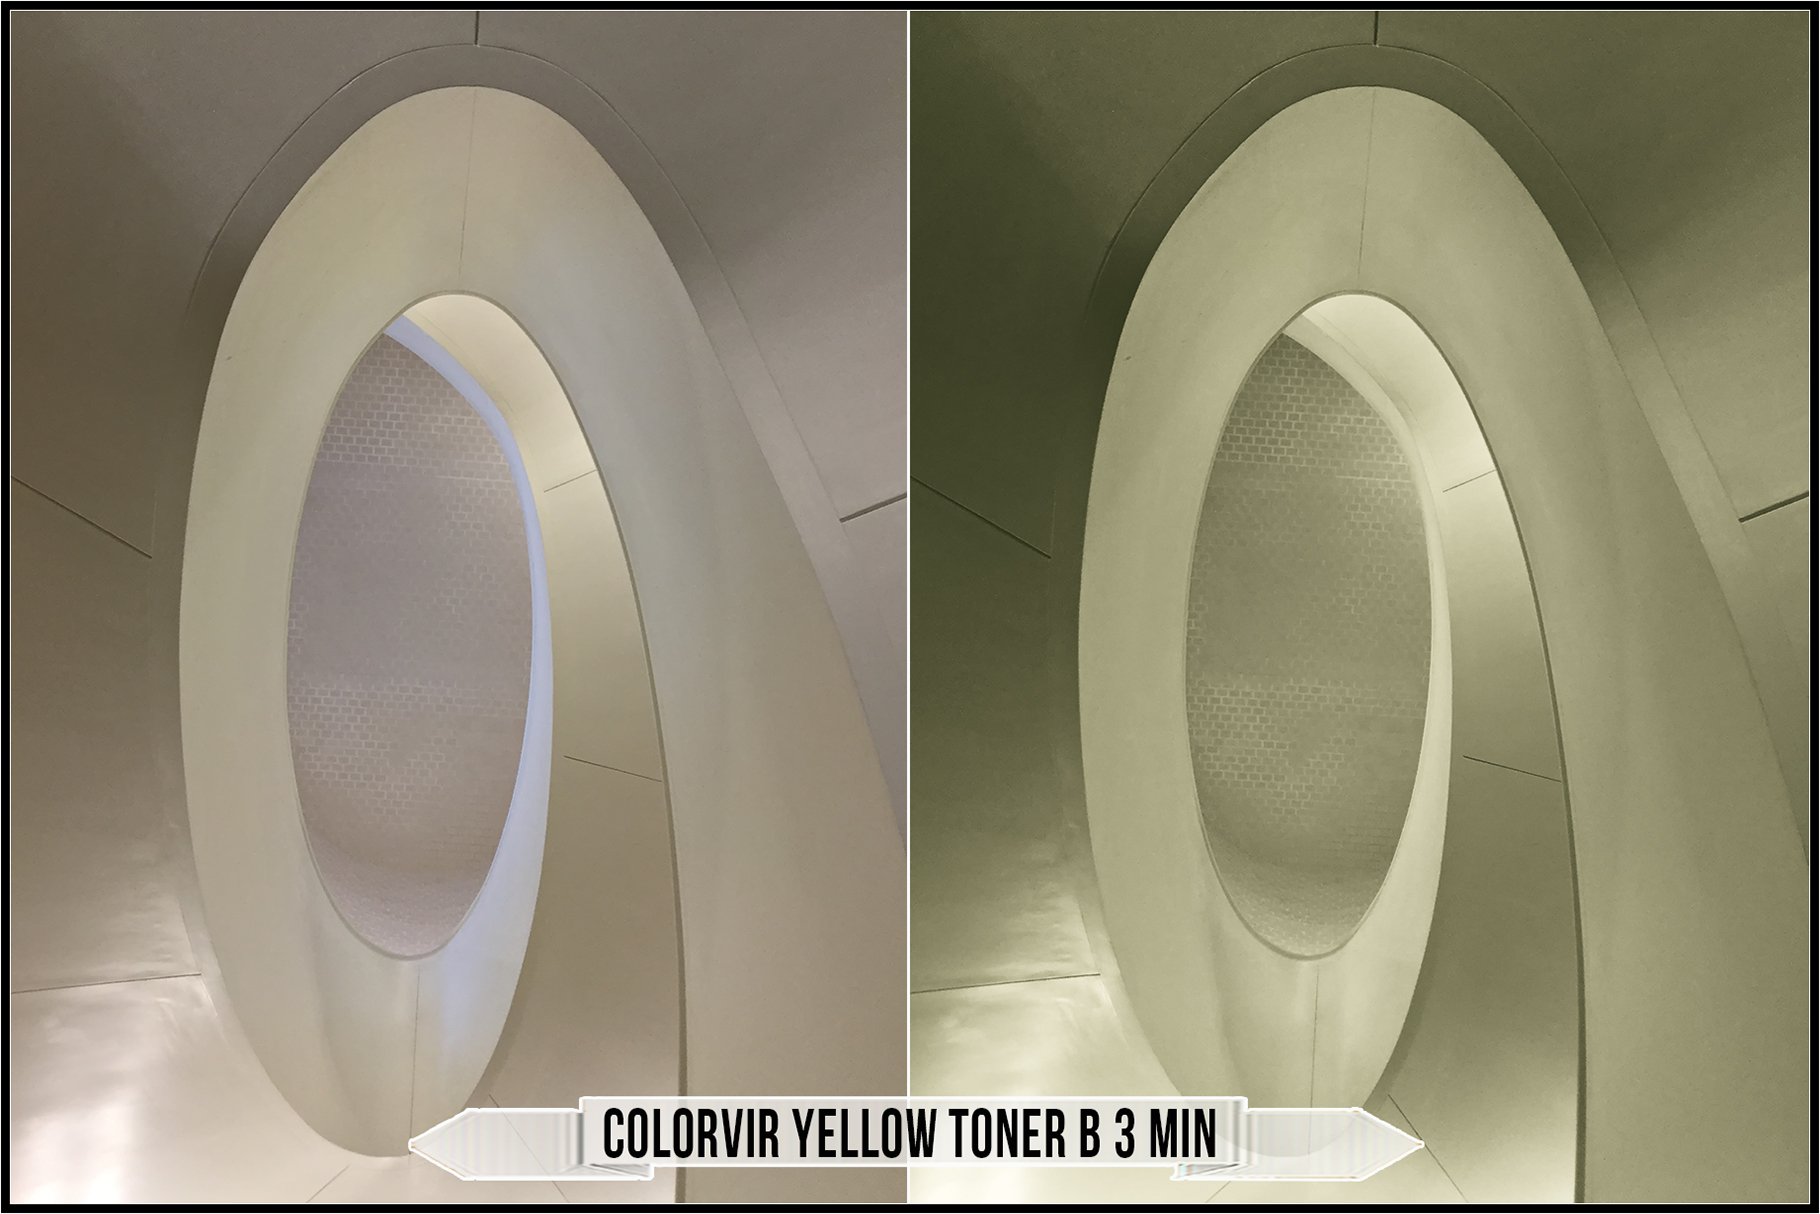 colorvir yellow toner b 3 min 192